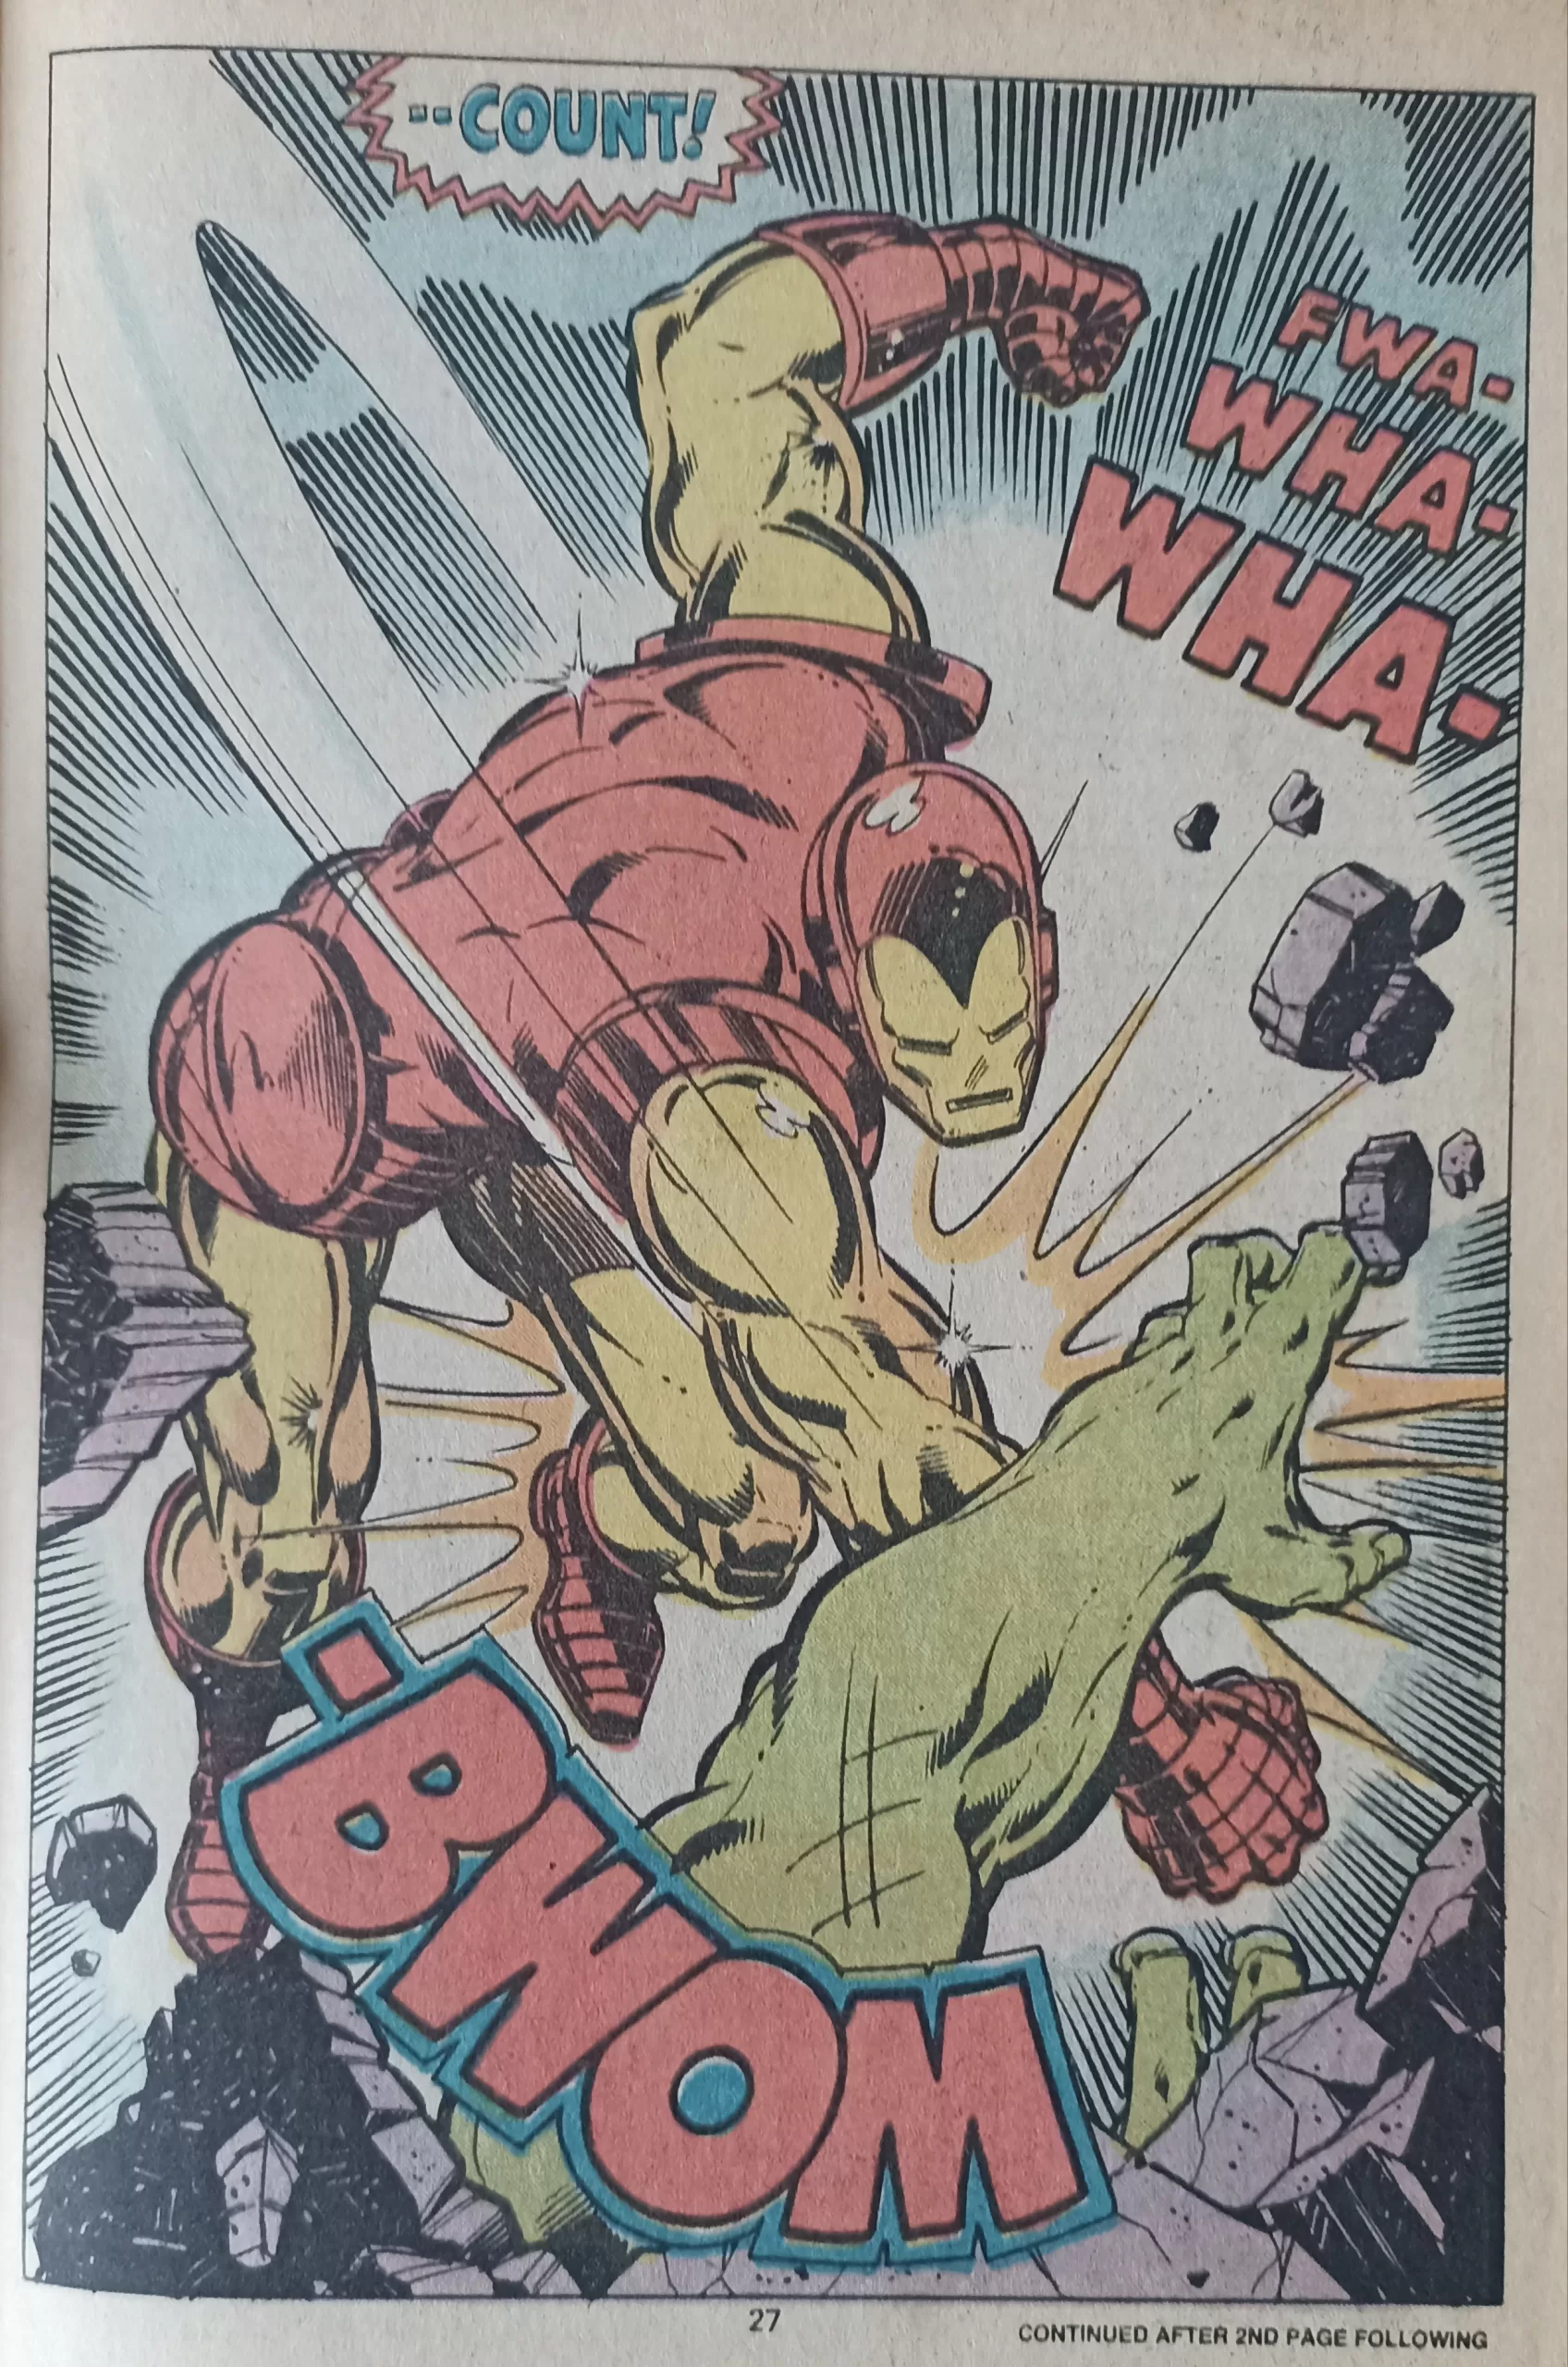 Iron Man vs. The Hulk